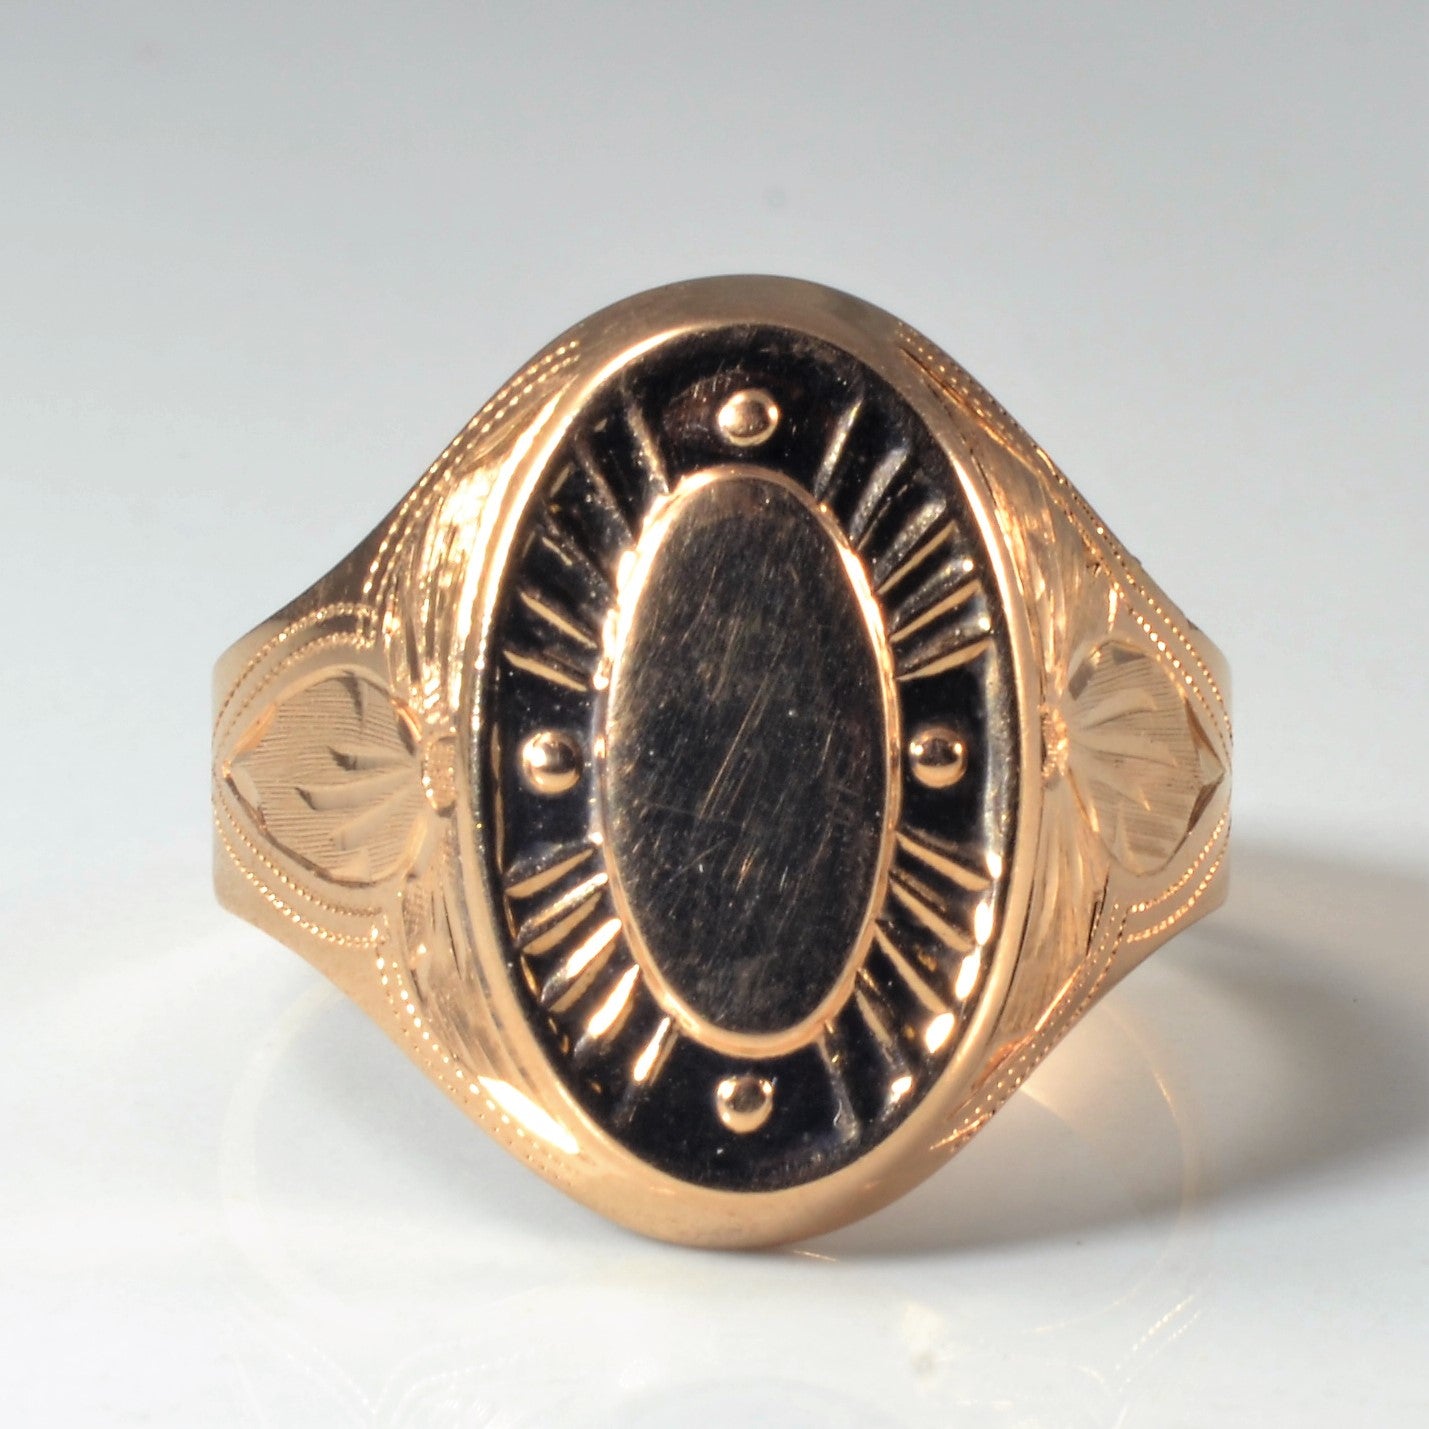 Rose Gold Textured Signet Ring | SZ 11.25 |